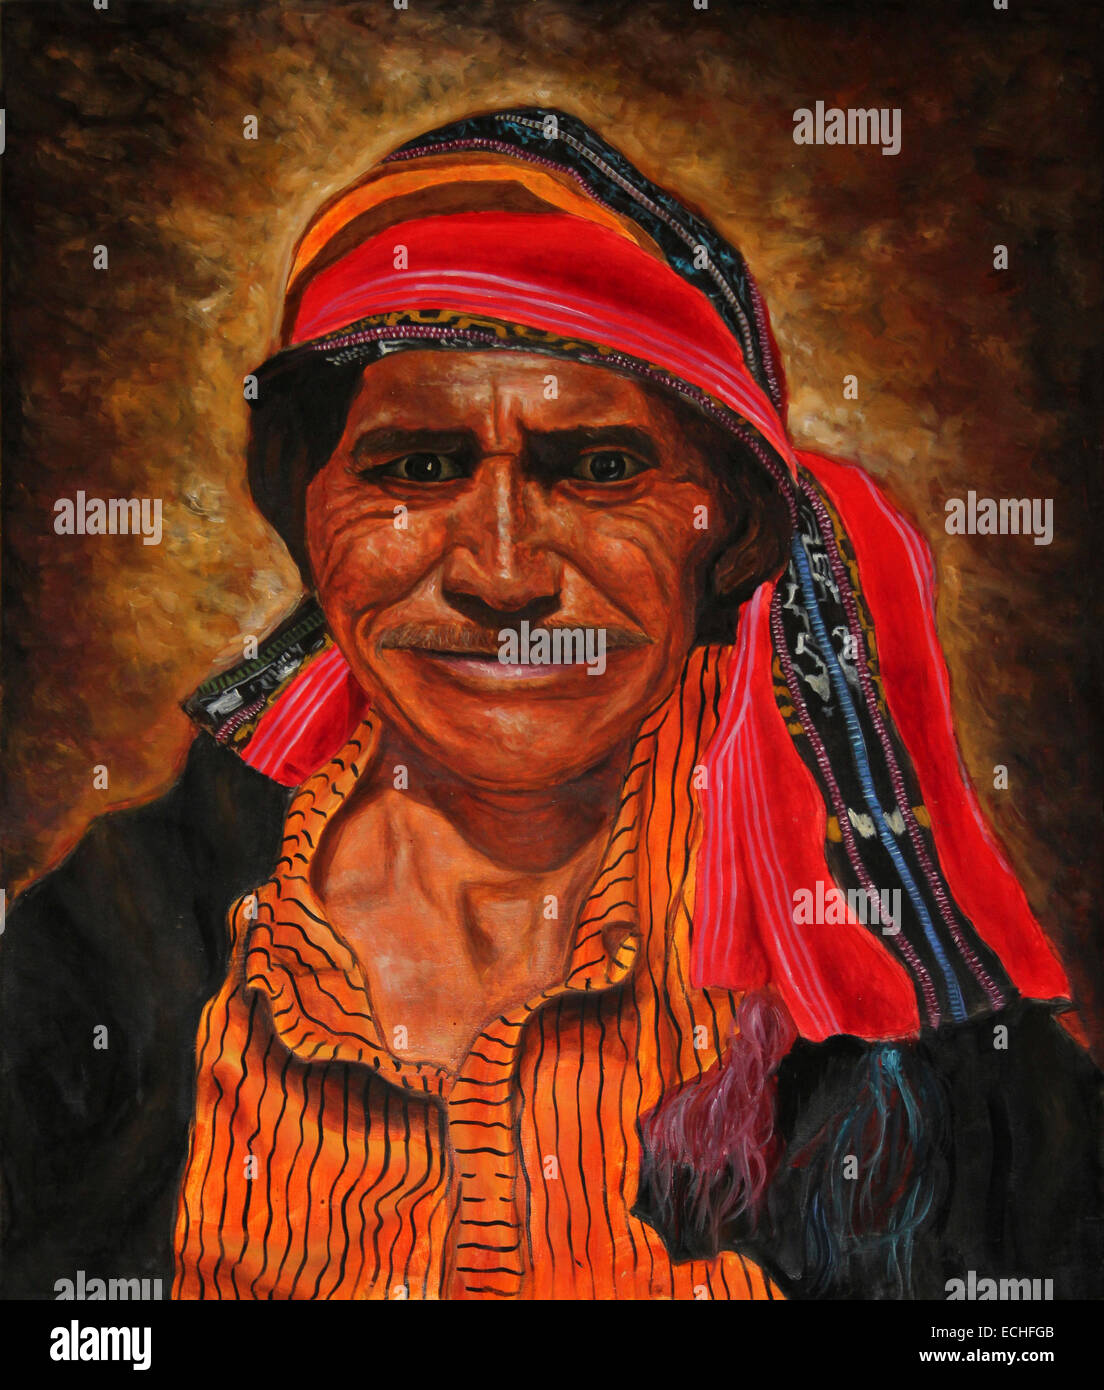 Guatemala Oil Painting Showing Indigenous Indian Man Stock Photo